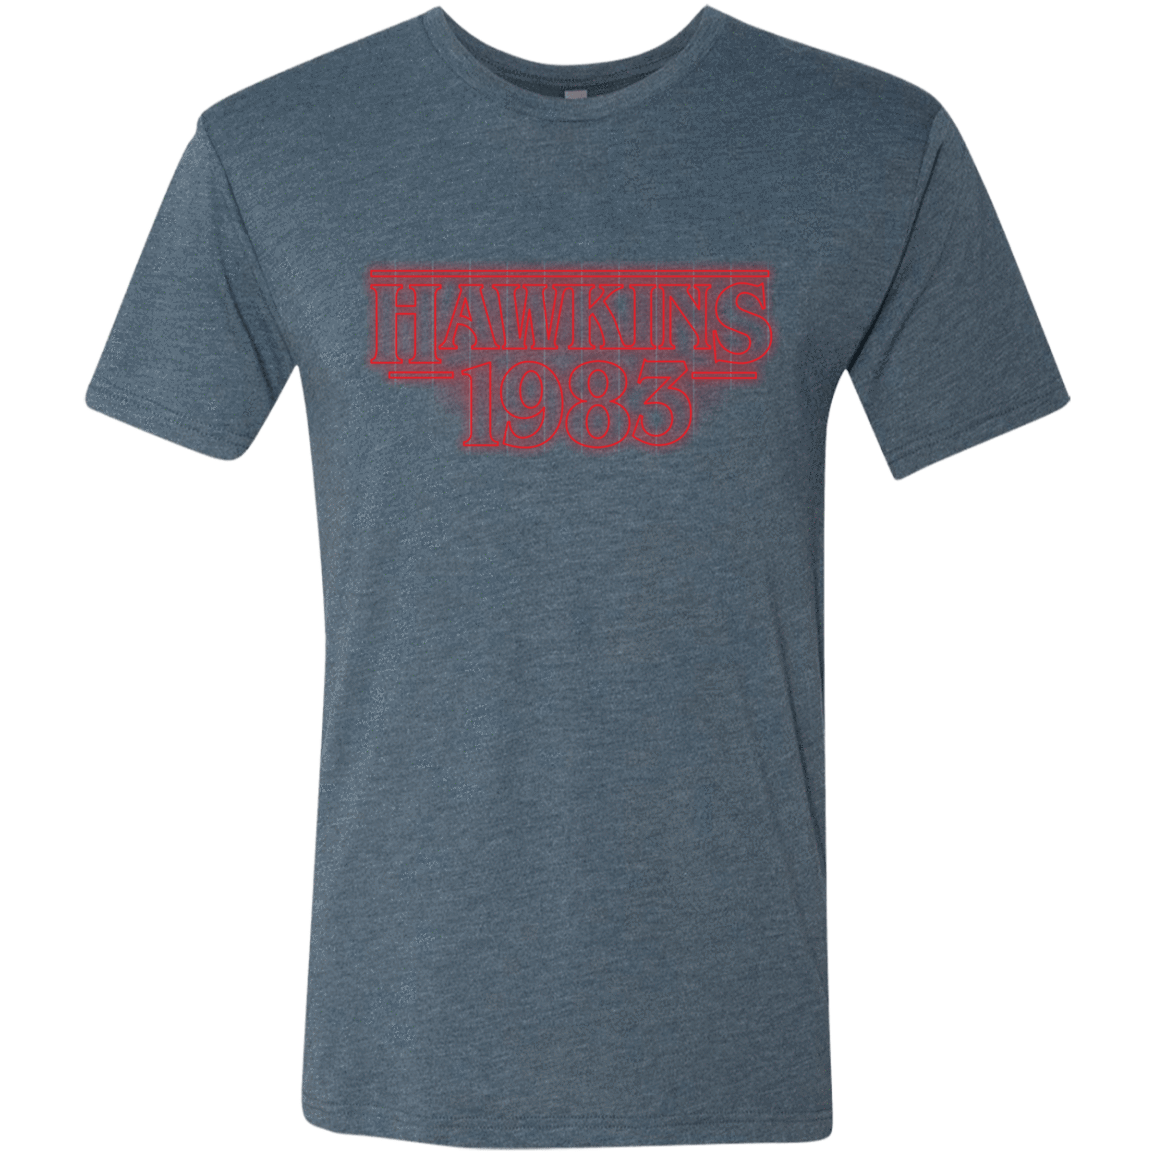 T-Shirts Indigo / Small Hawkins 83 Men's Triblend T-Shirt